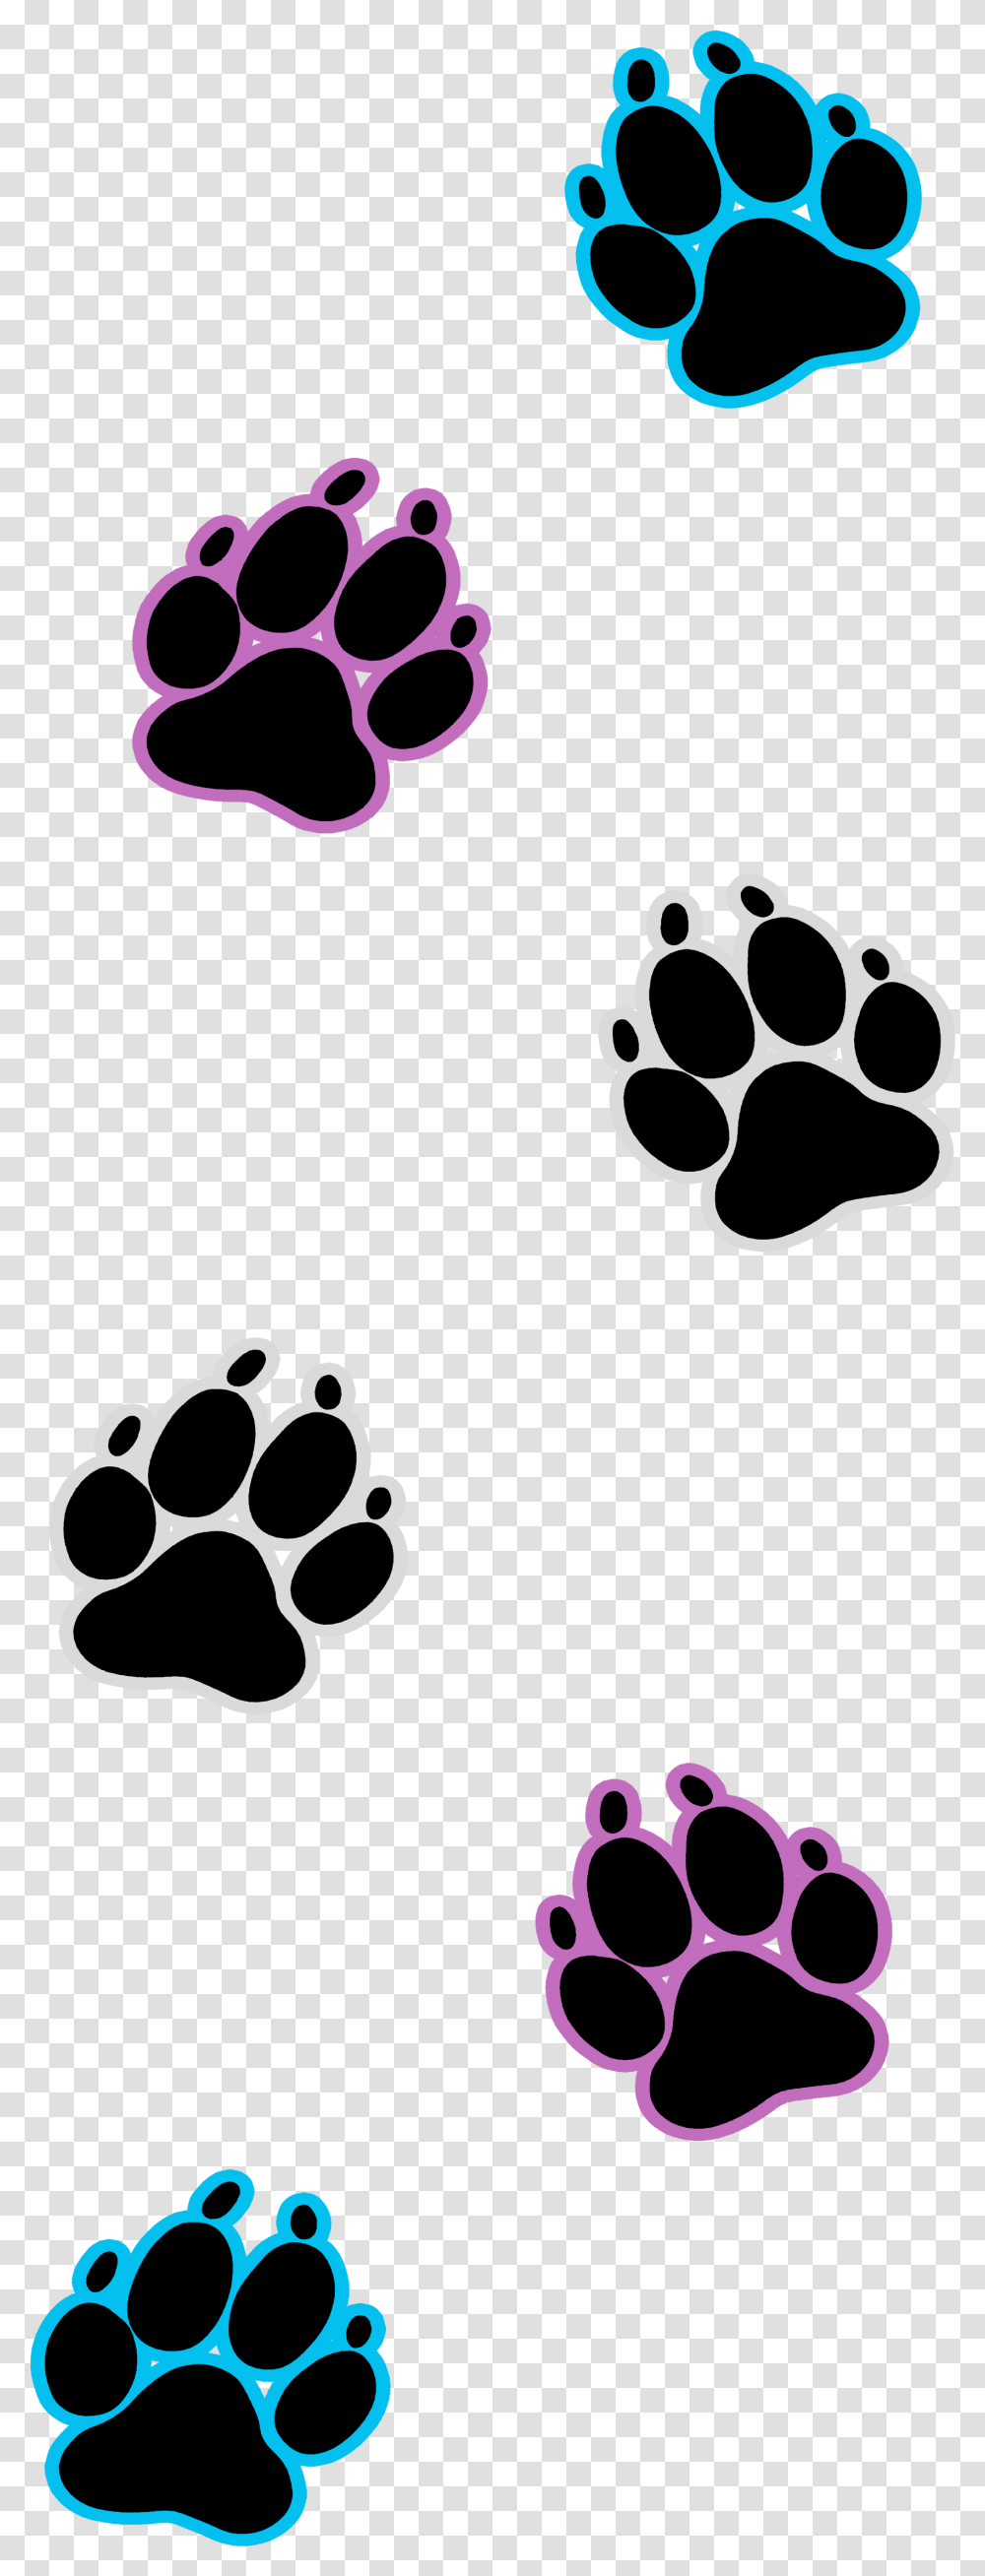 Dog Pawprint Clipart Background Heart Paw Print, Footprint Transparent Png